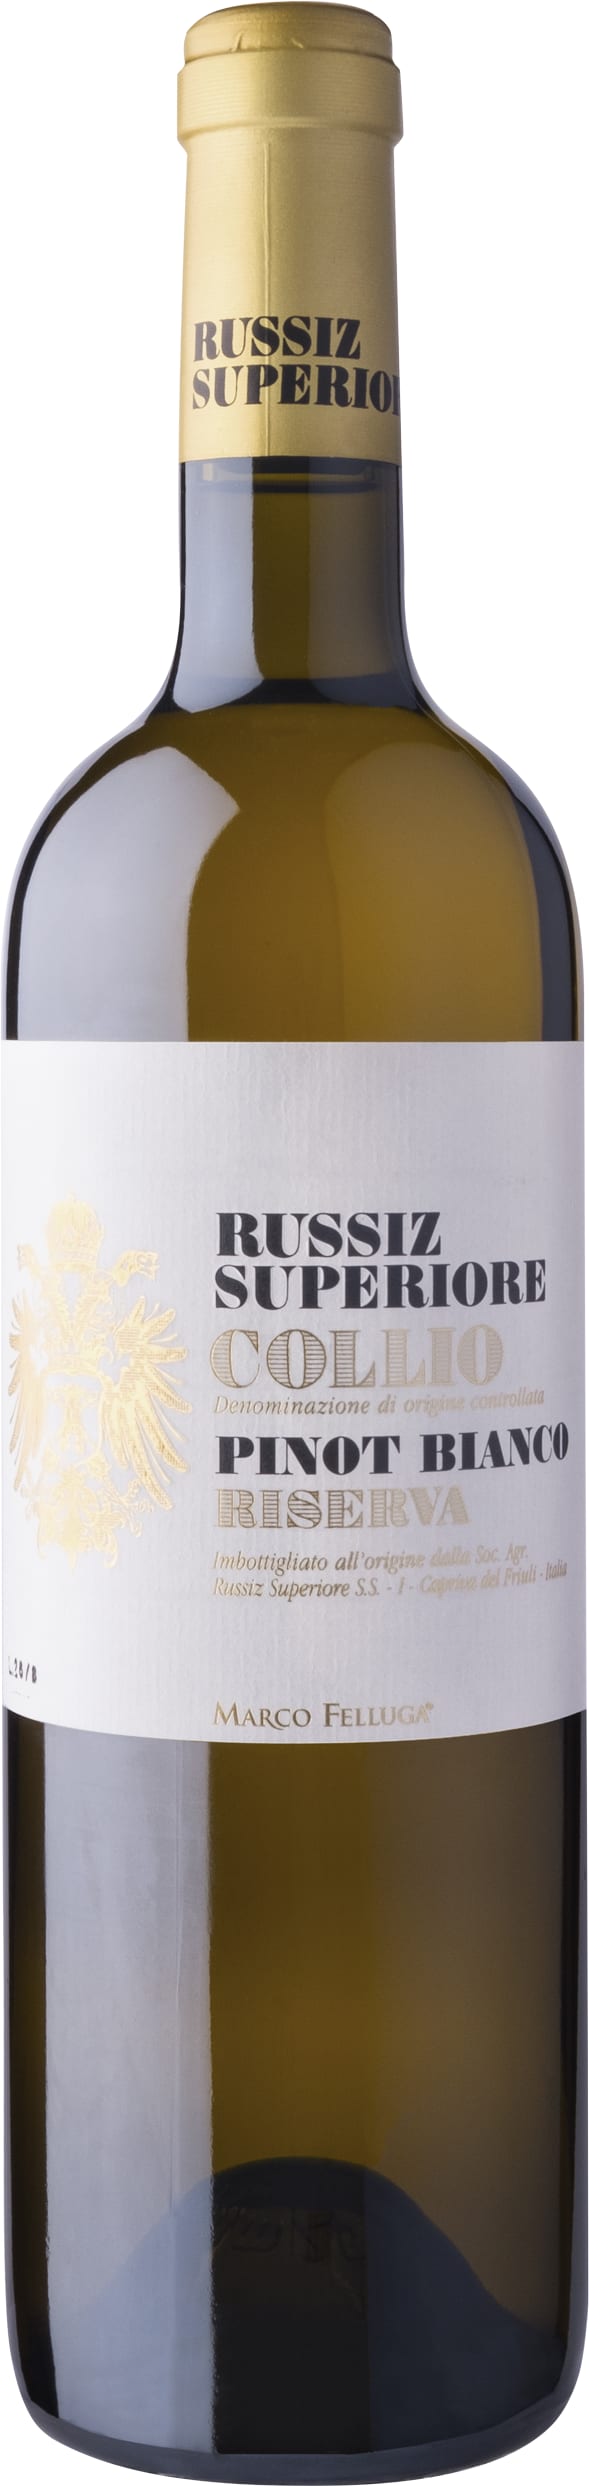 Russiz Superiore Pinot Bianco Riserva, Collio 2016 6x75cl - Just Wines 